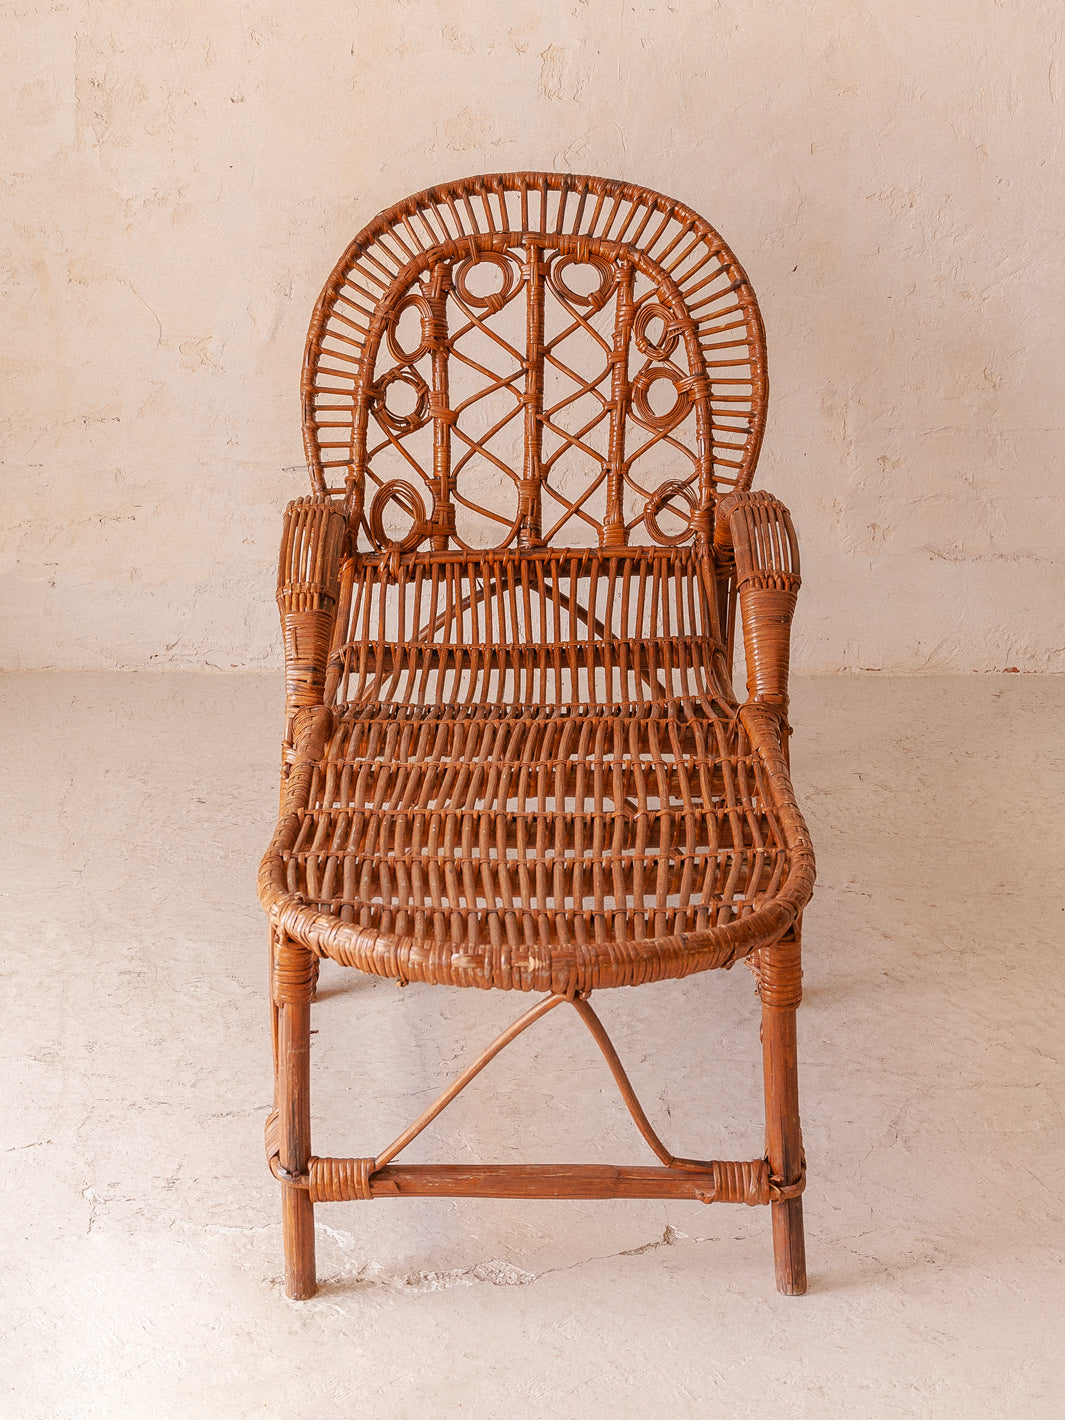 50s rattan chaise longue